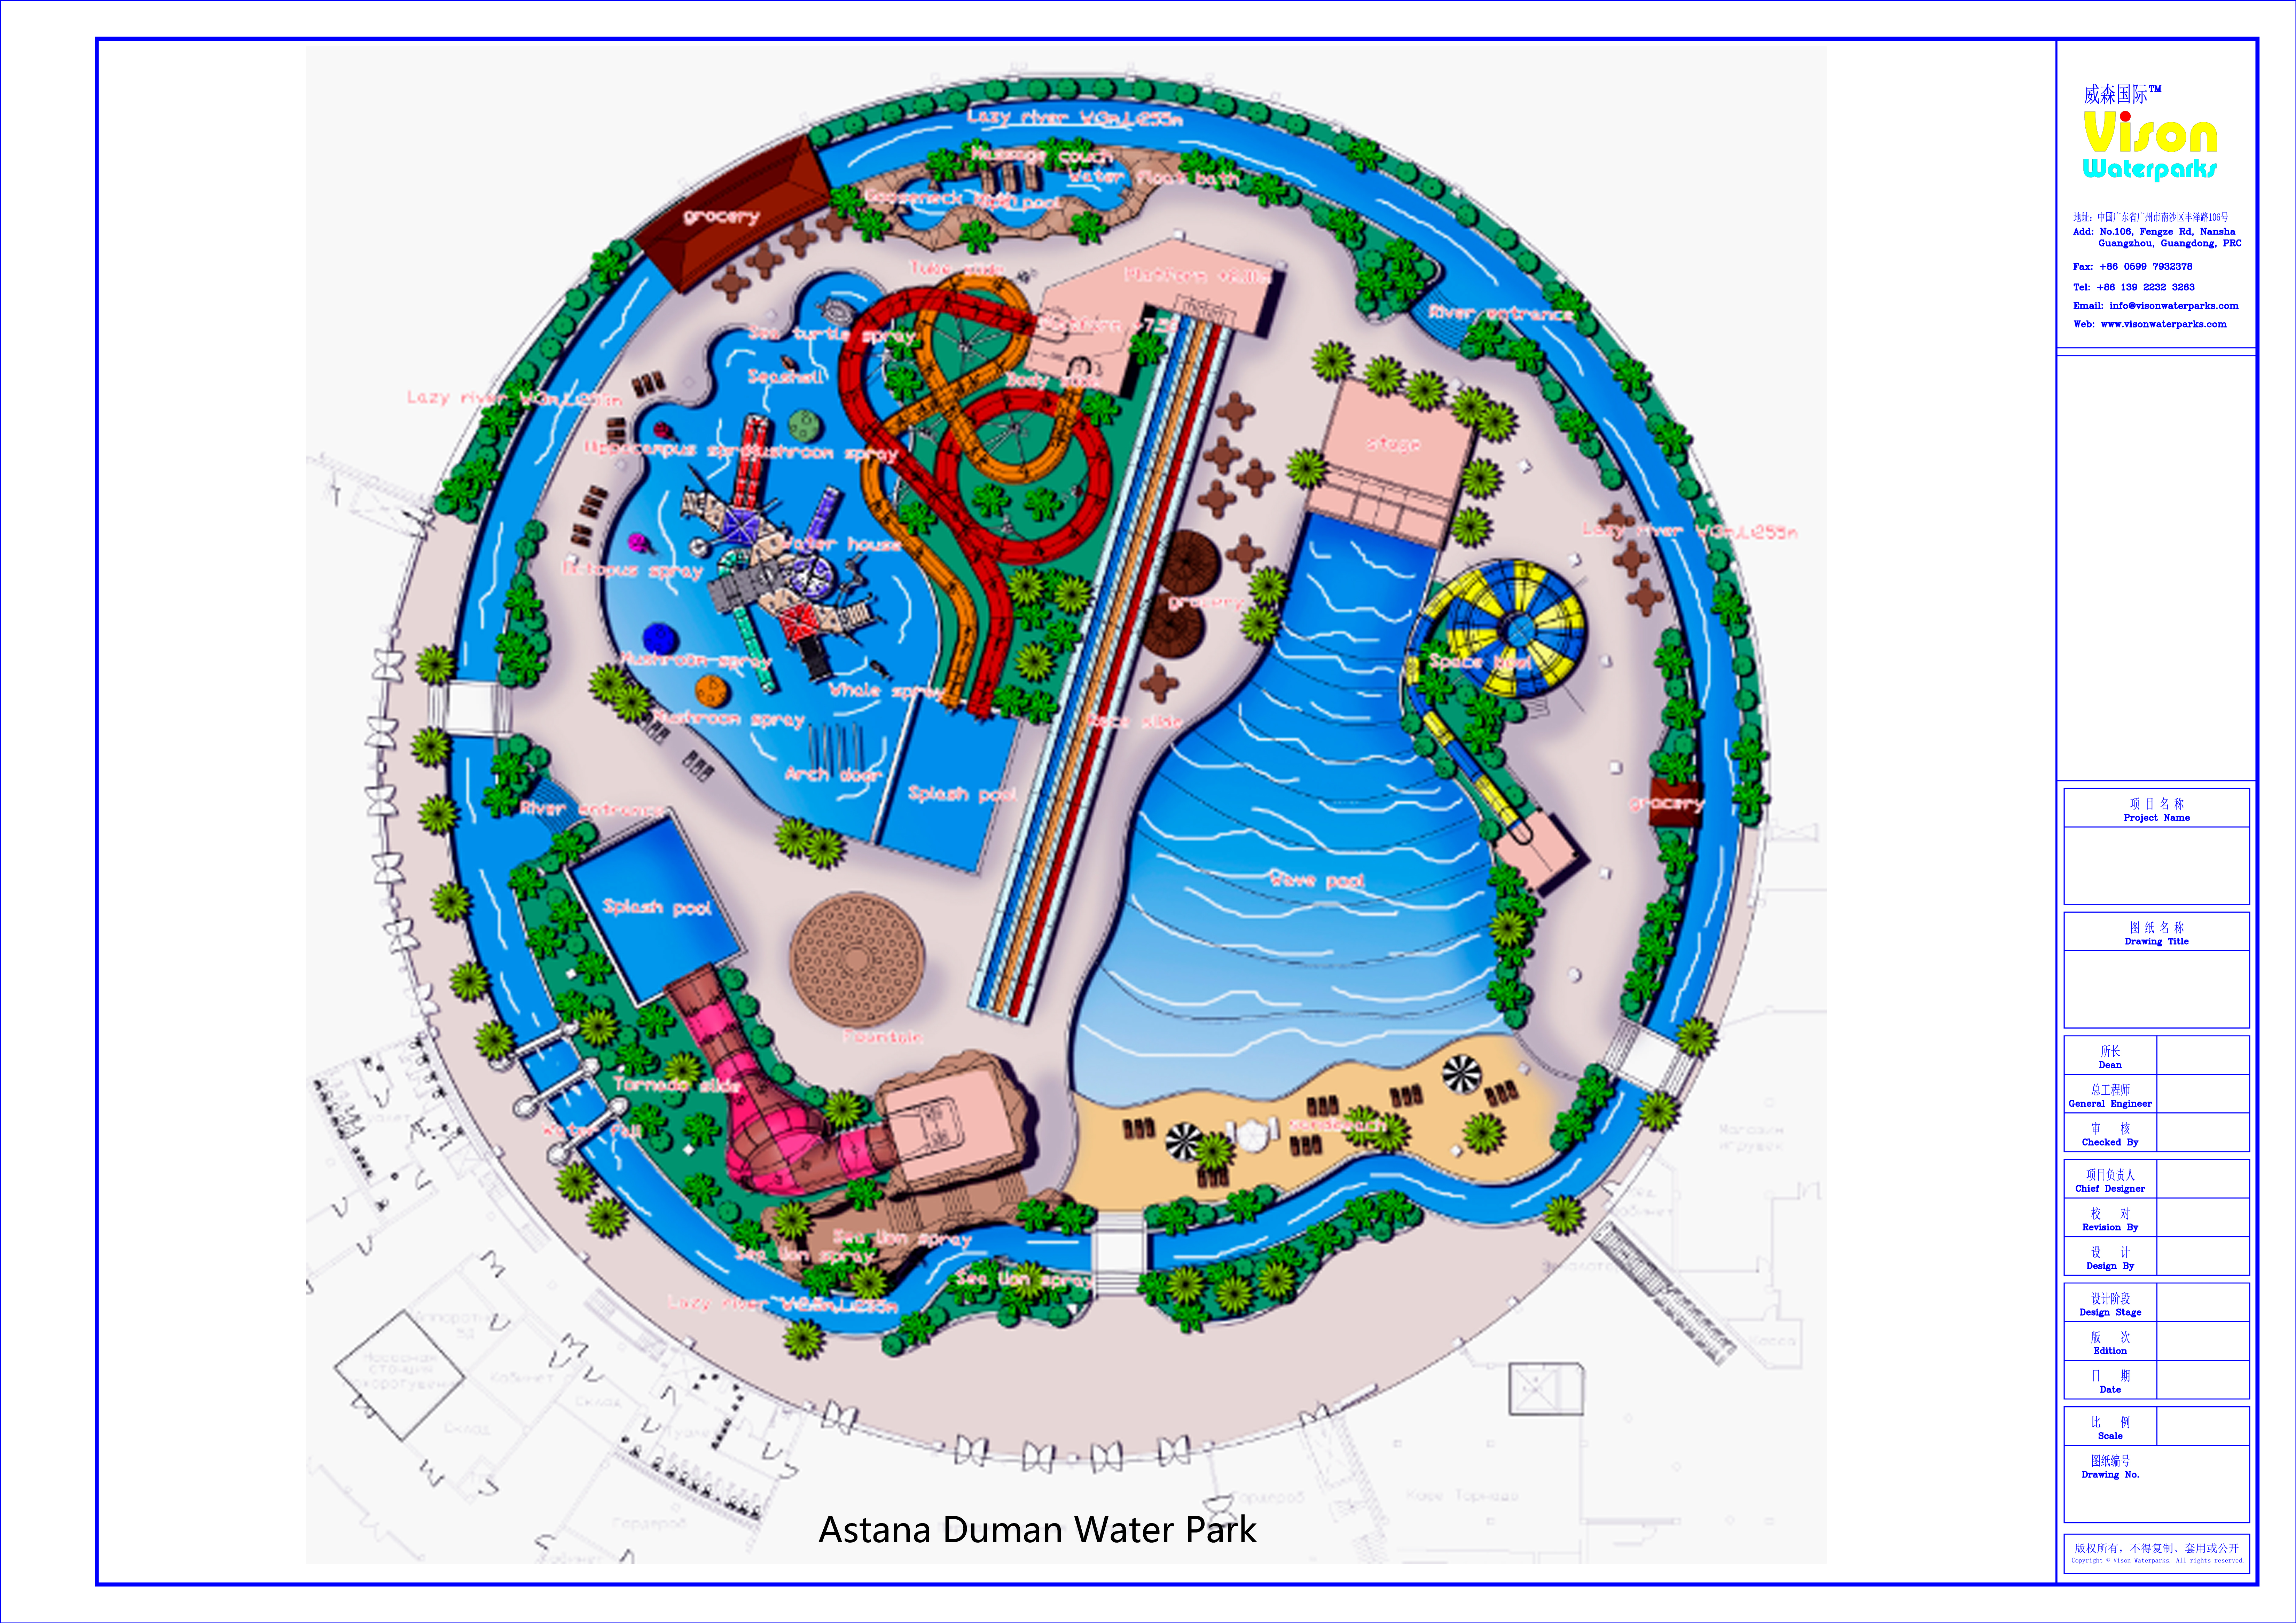 Kazakhstan Astana Ailand Water Park